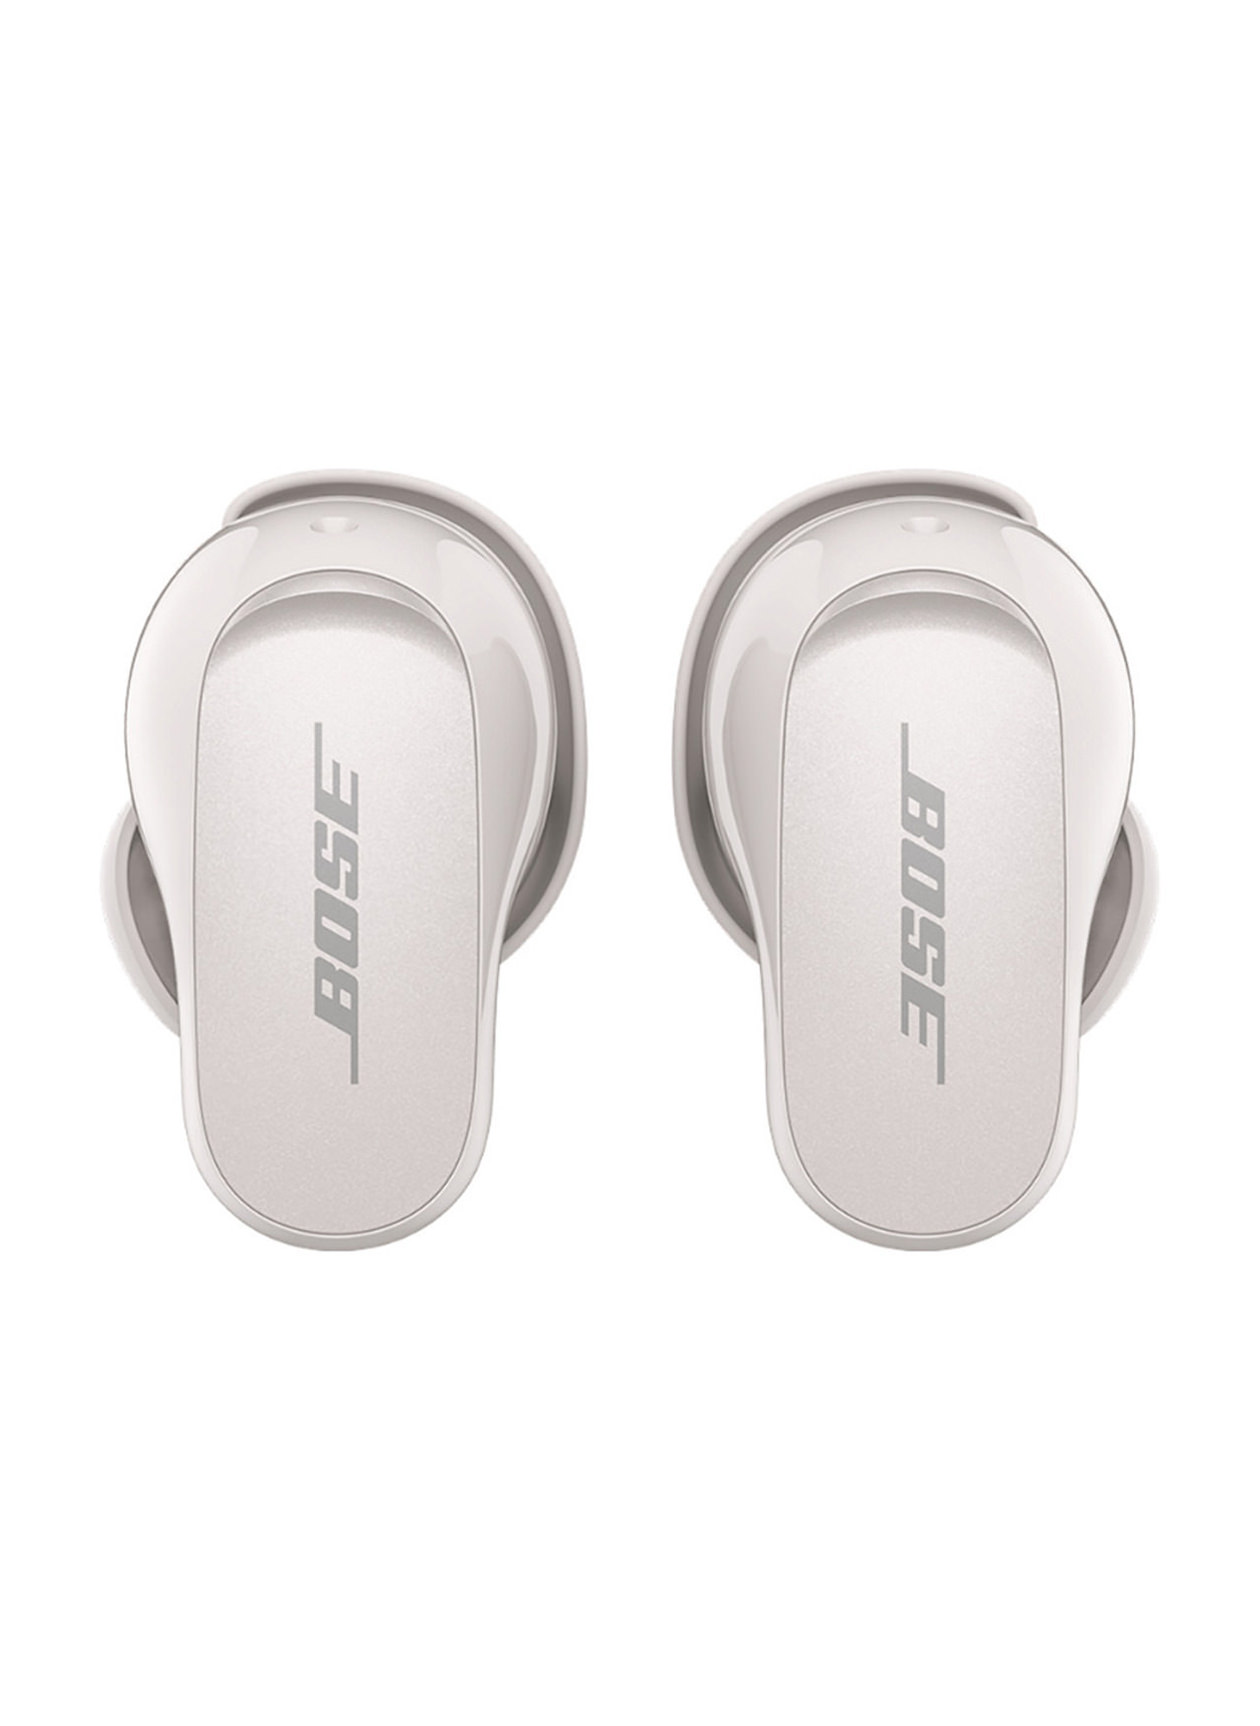 Soapstone Bose Quietcomfort Earbuds II | Bose